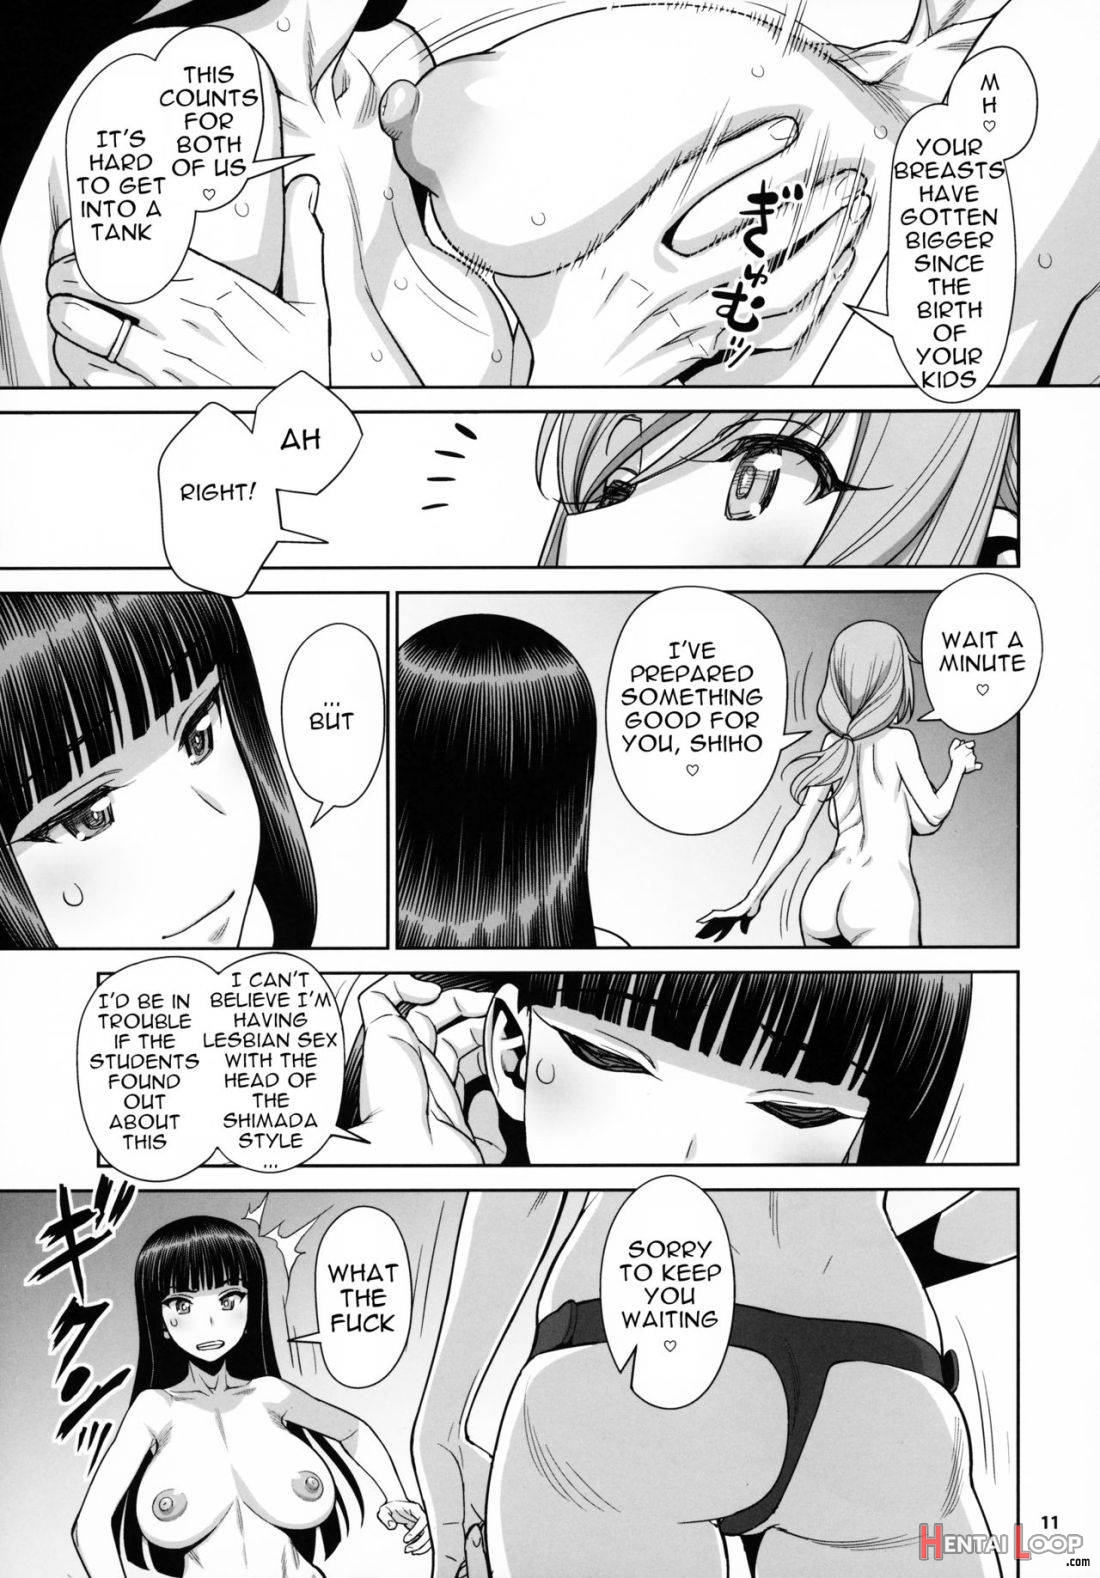 Shimada-ryuu VS Nishizumi-ryuu Bijukujo Lesbian Kyokugen Kougyaku Gurui page 10